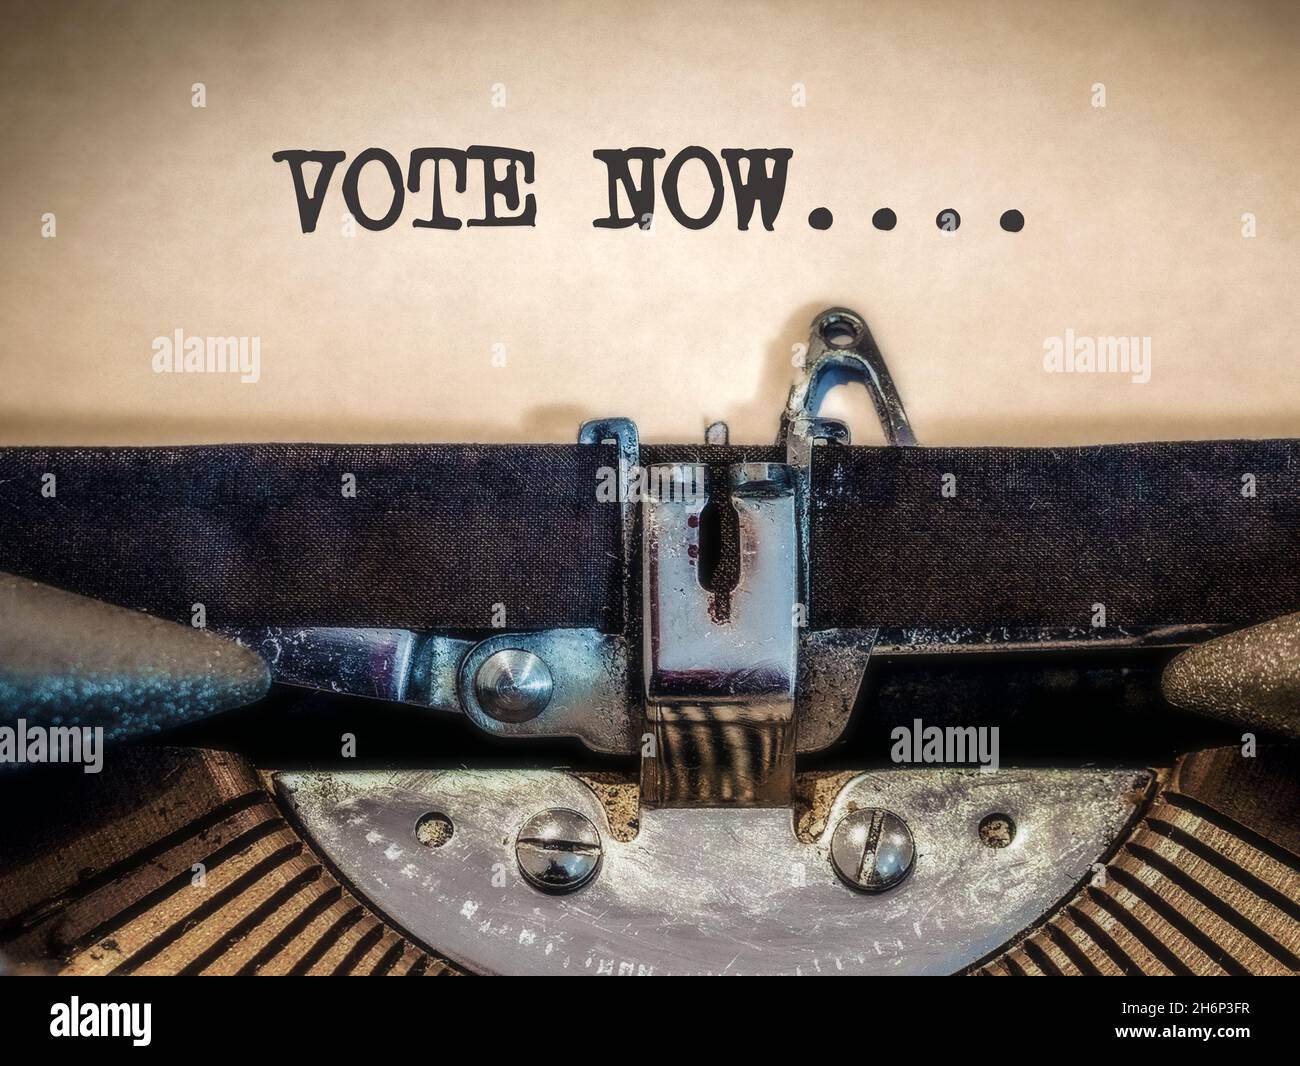 Vote Now displayed on a vintage typewriter Stock Photo